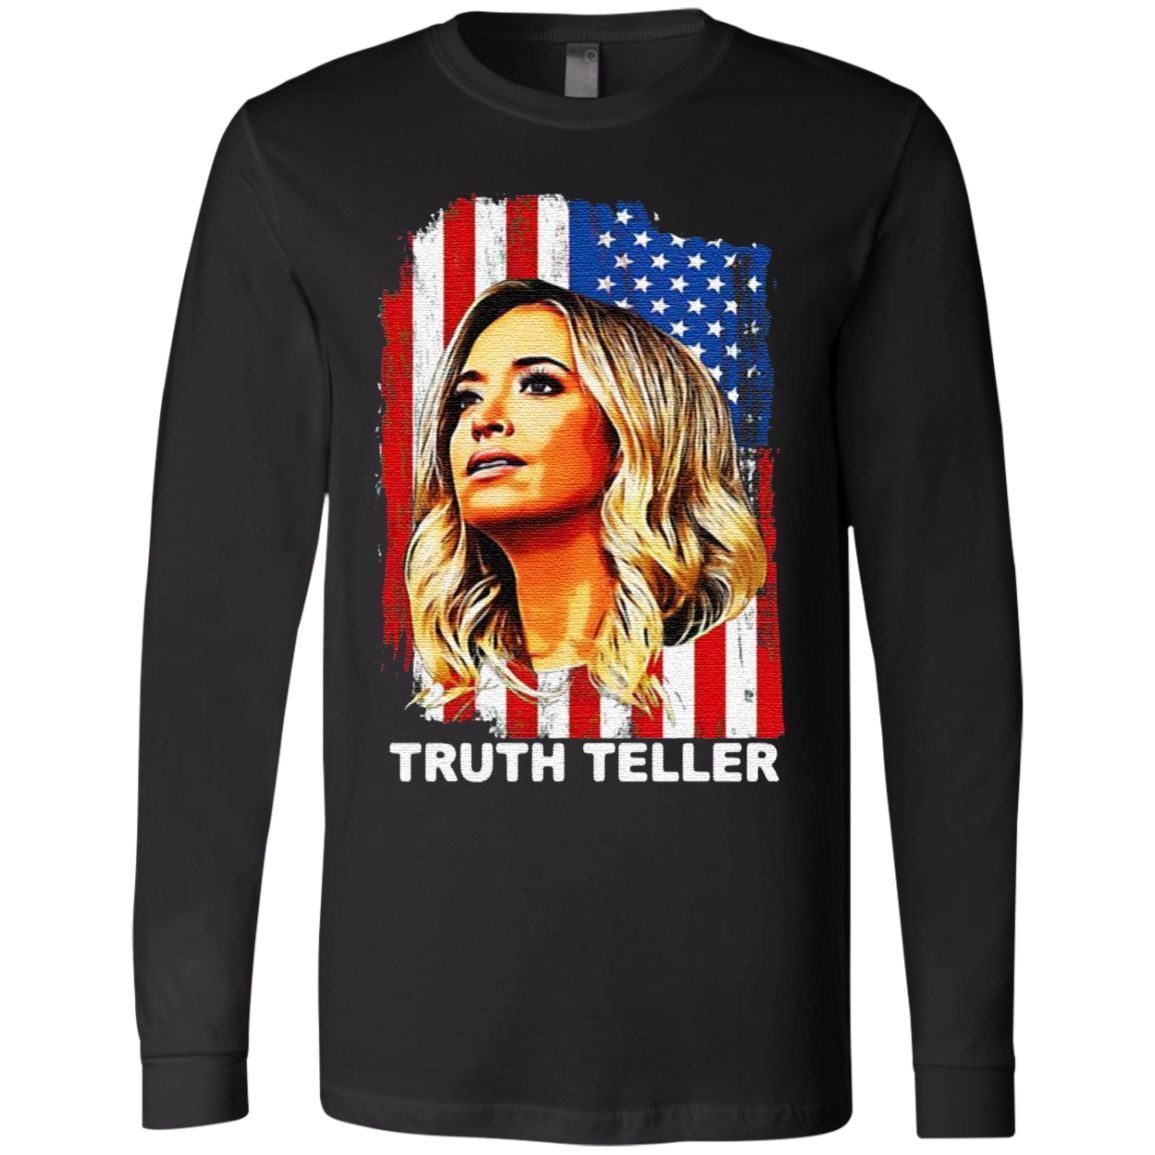 Kayleigh Mcenany Truth Teller shirt 2